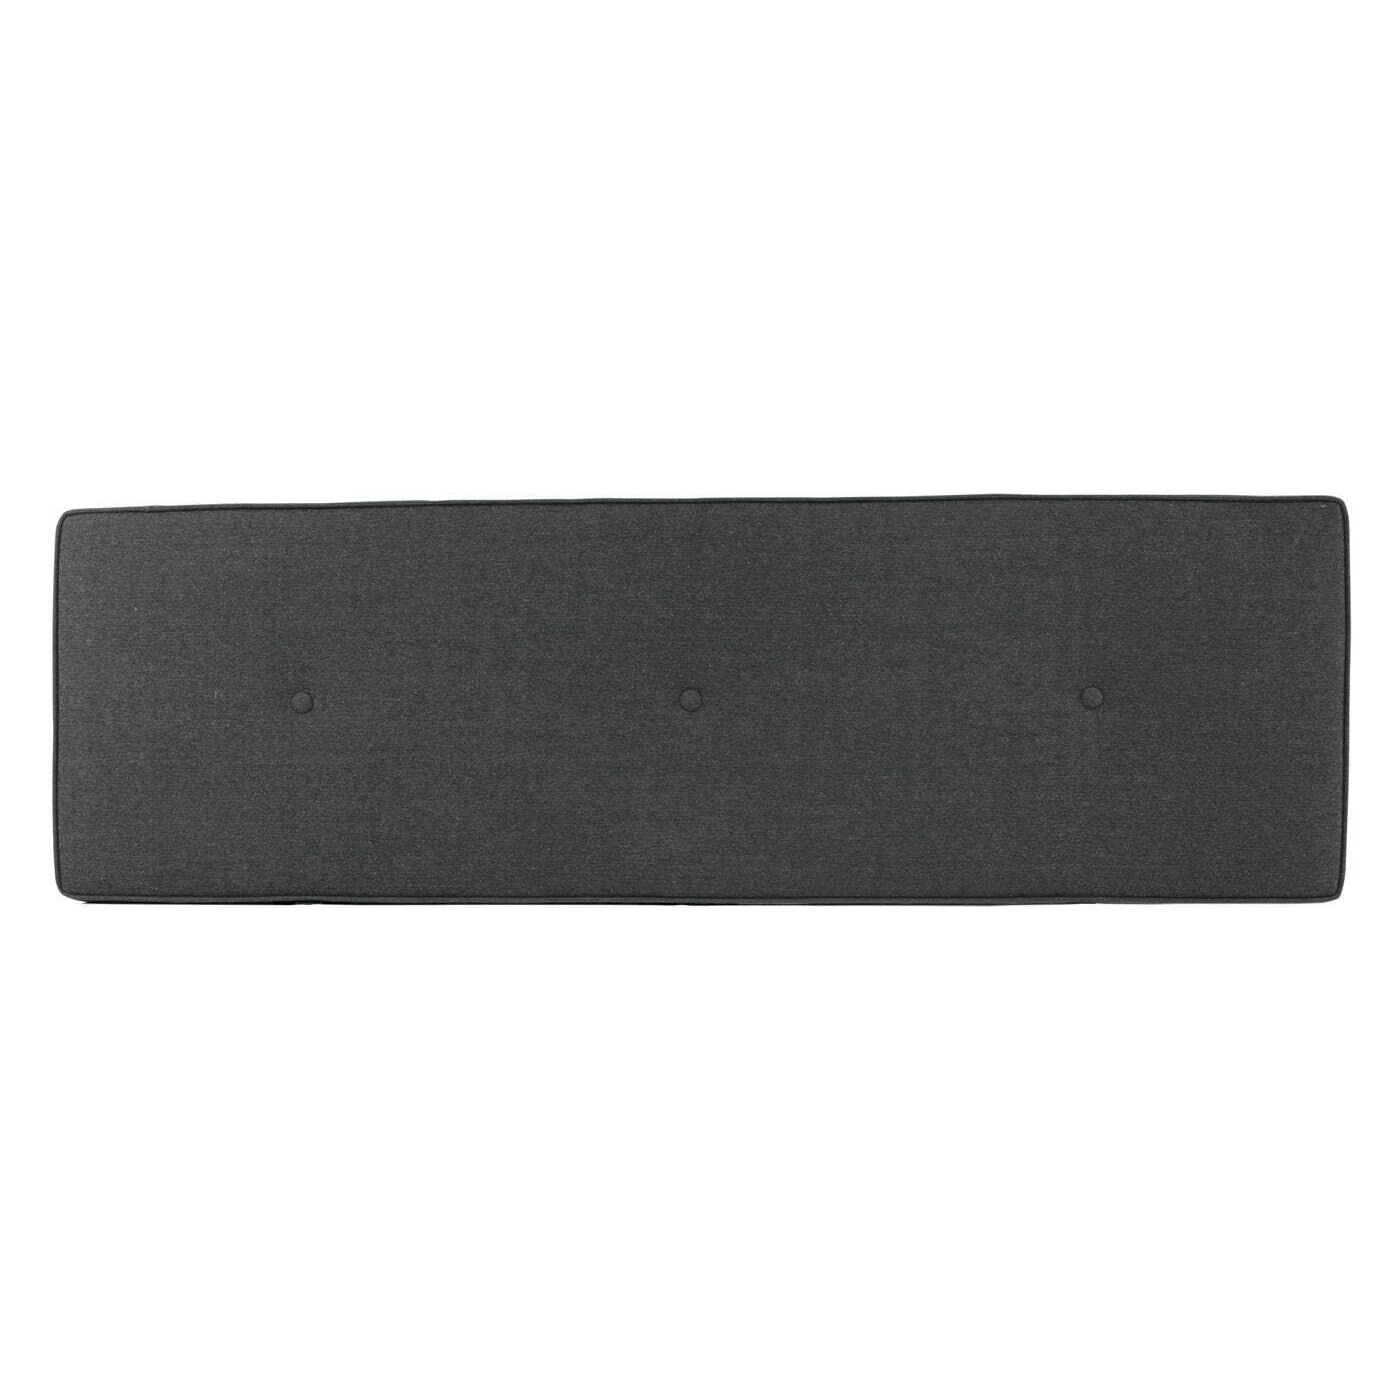 Heal's Brunel Blanket Box Cushion Smoke Grey - image 1